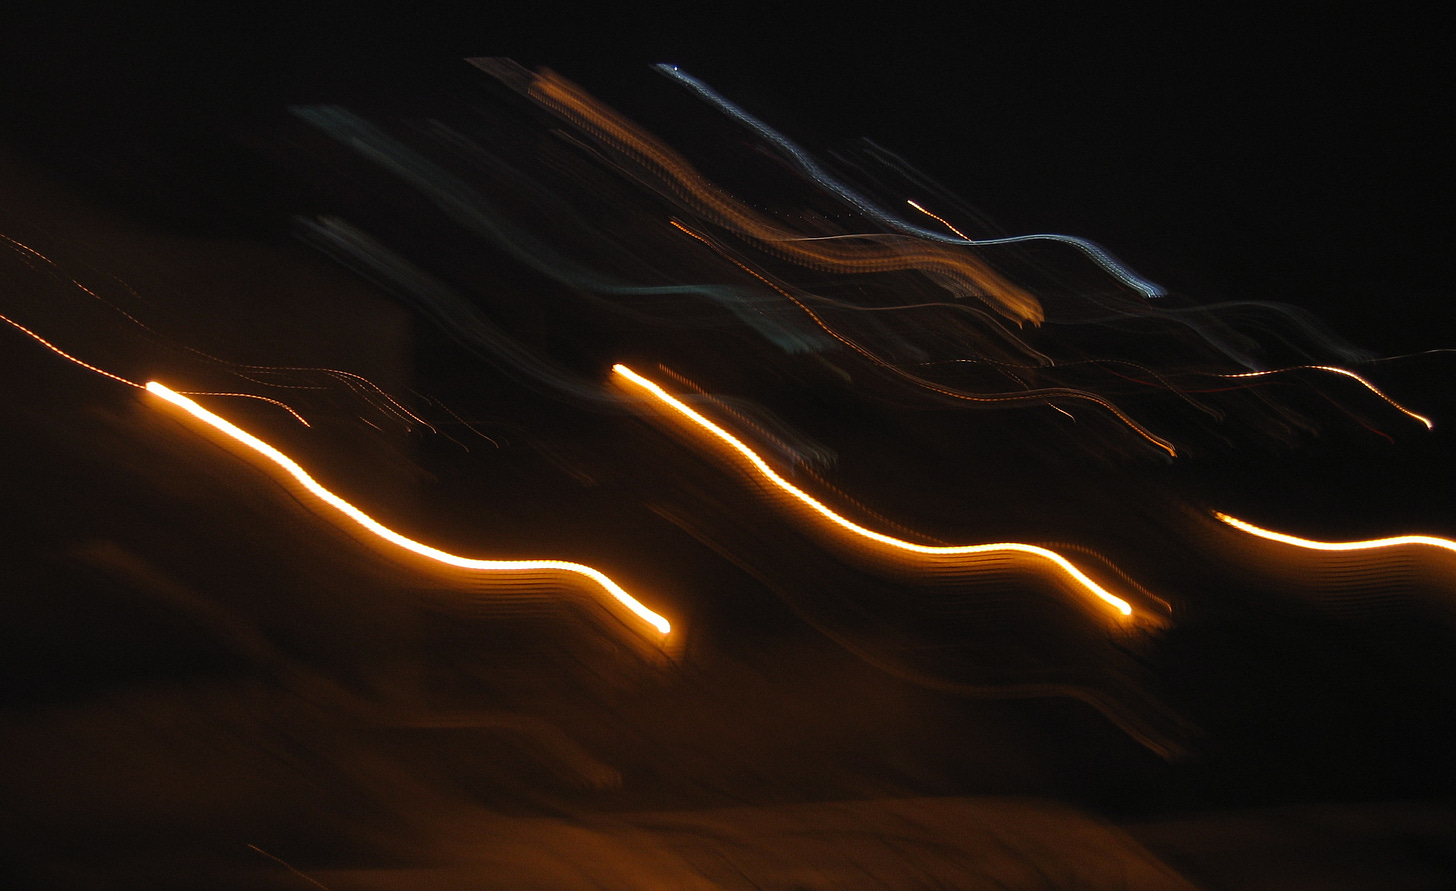 blurred image of streetlights at night